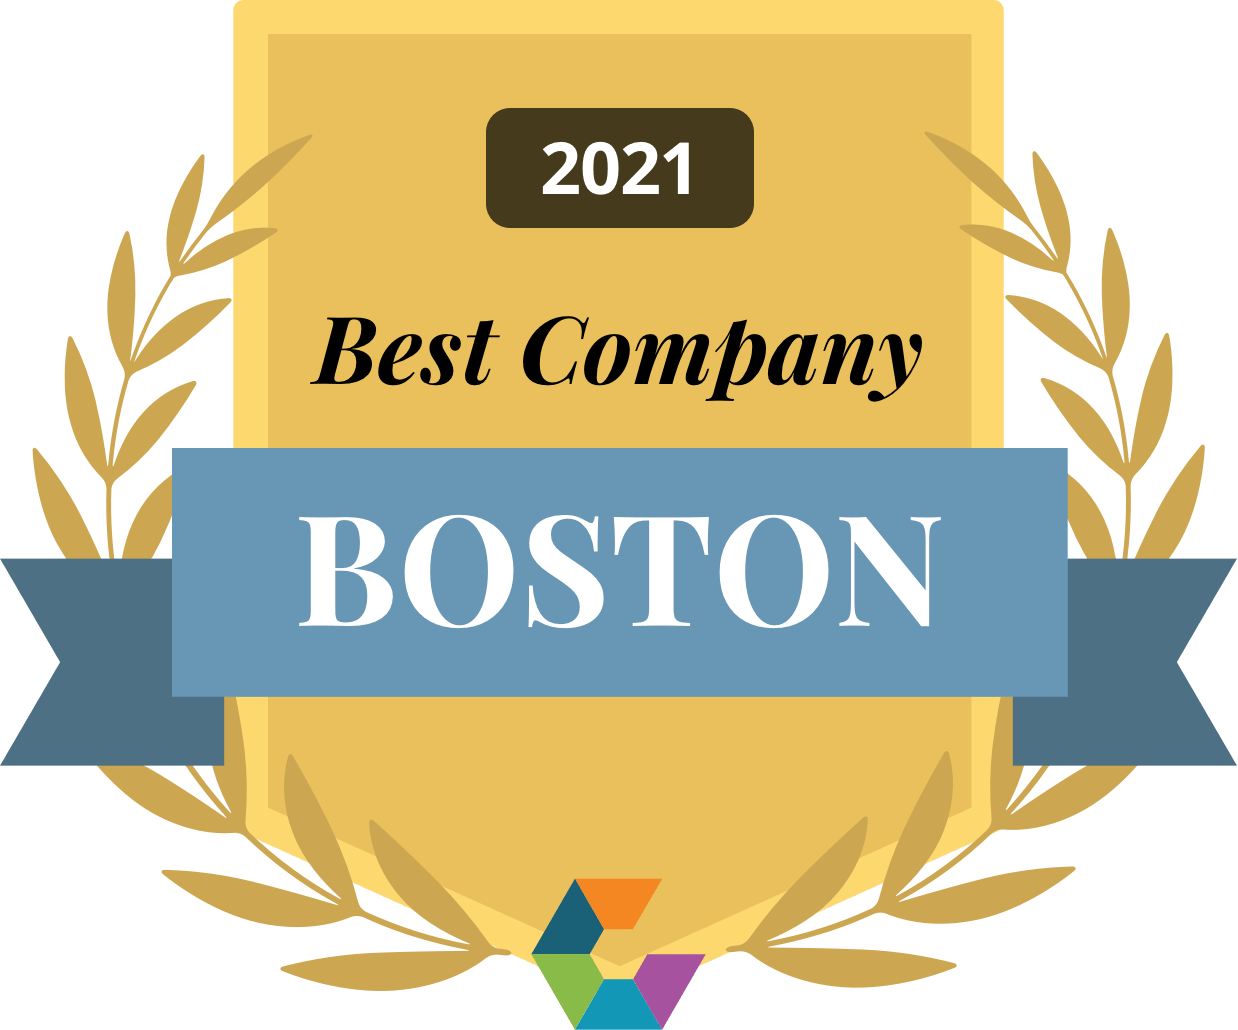 Best Company Boston 2021